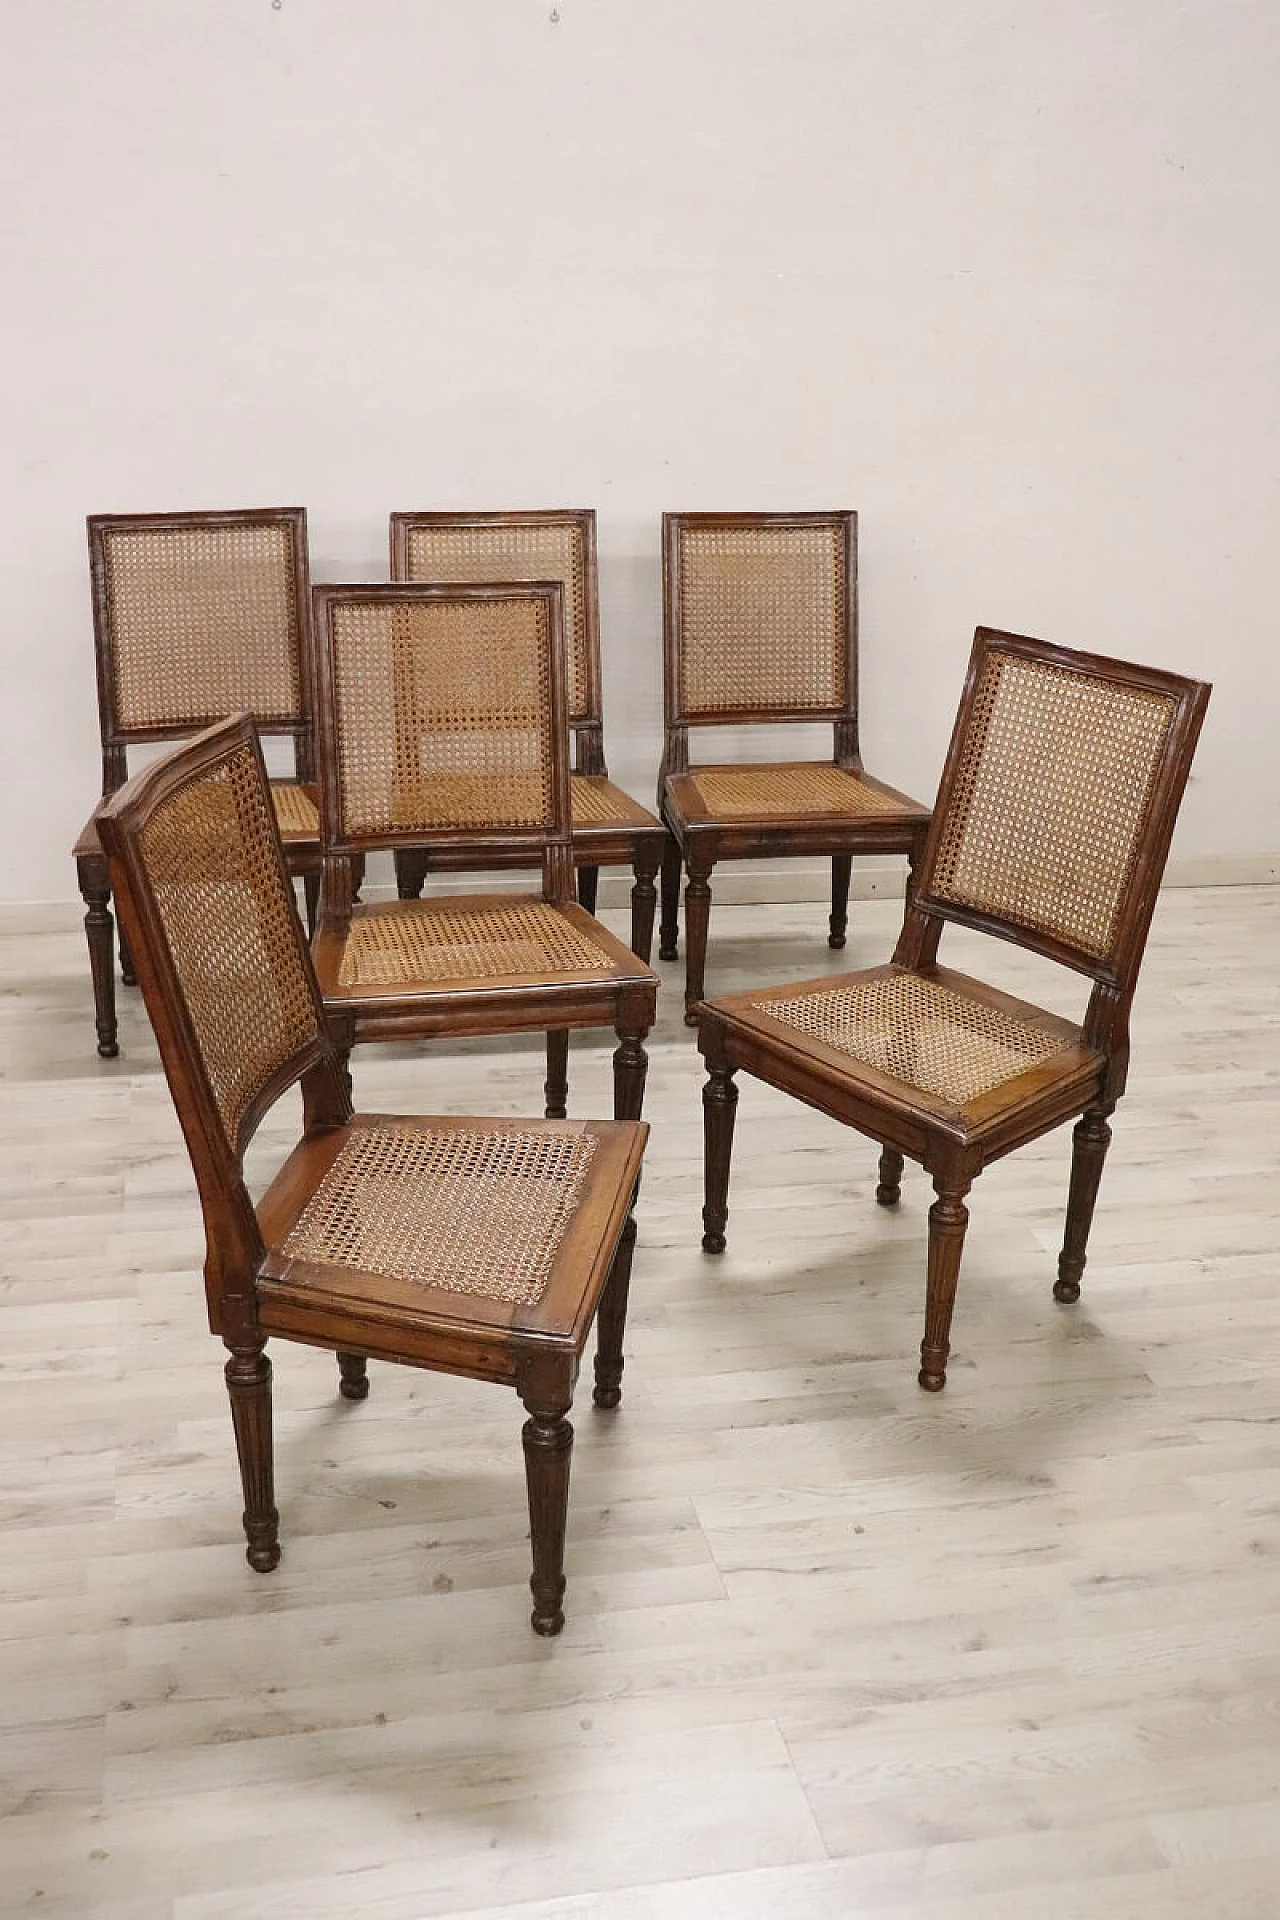 6 Vienna walnut and straw chairs, 18th century 3